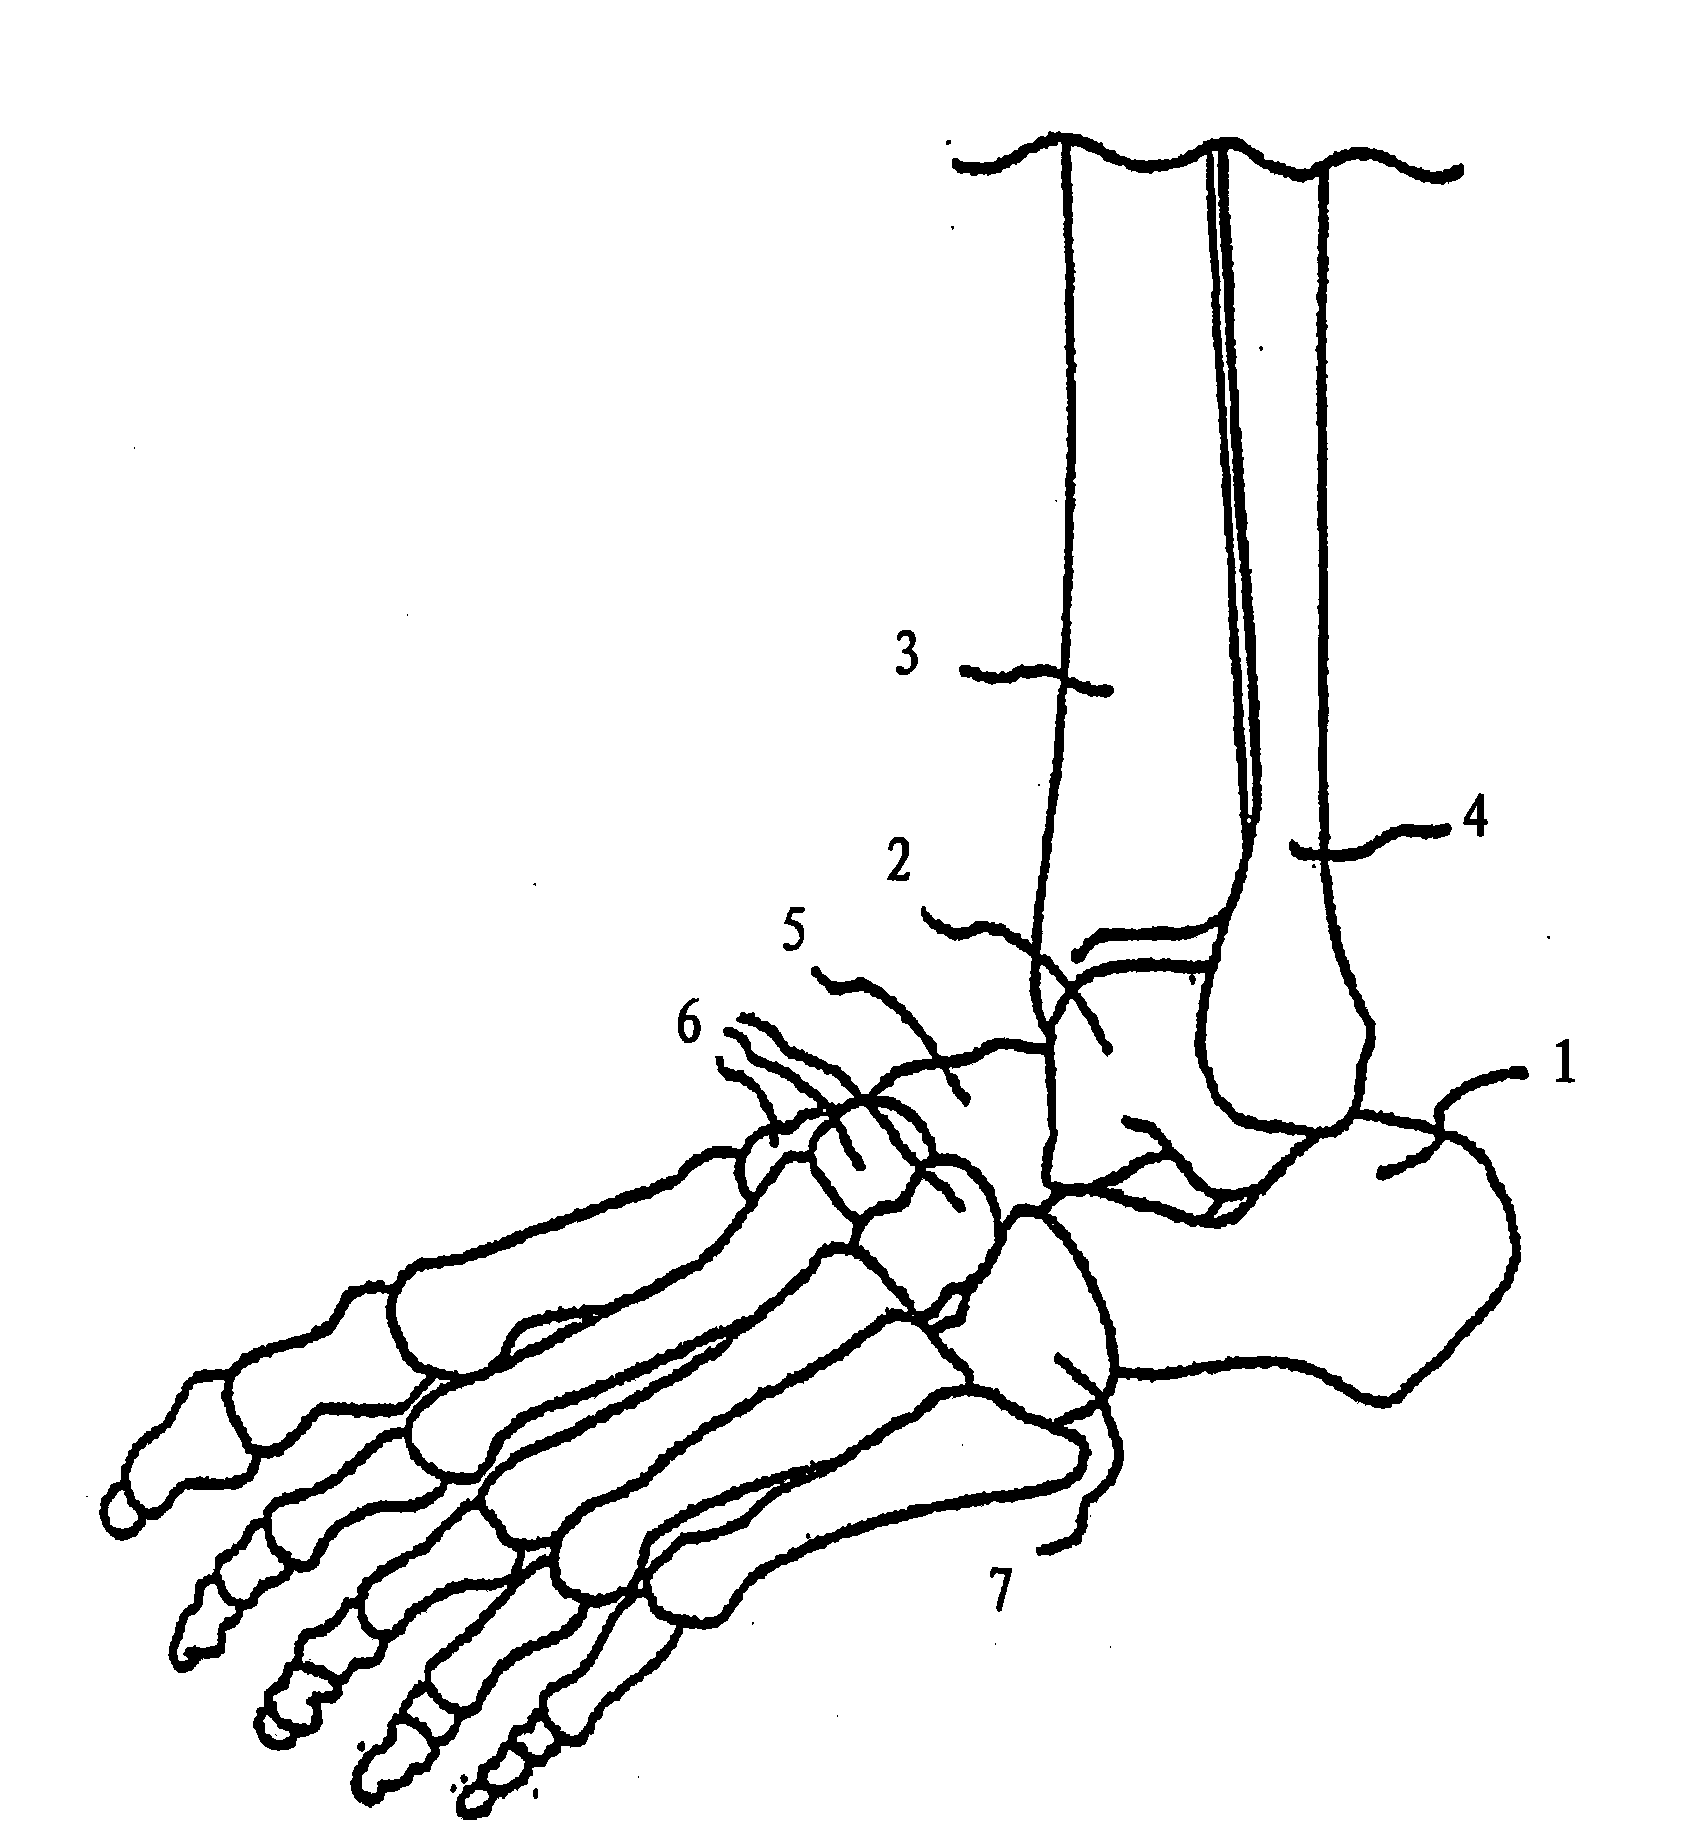 Bone nail for the heel